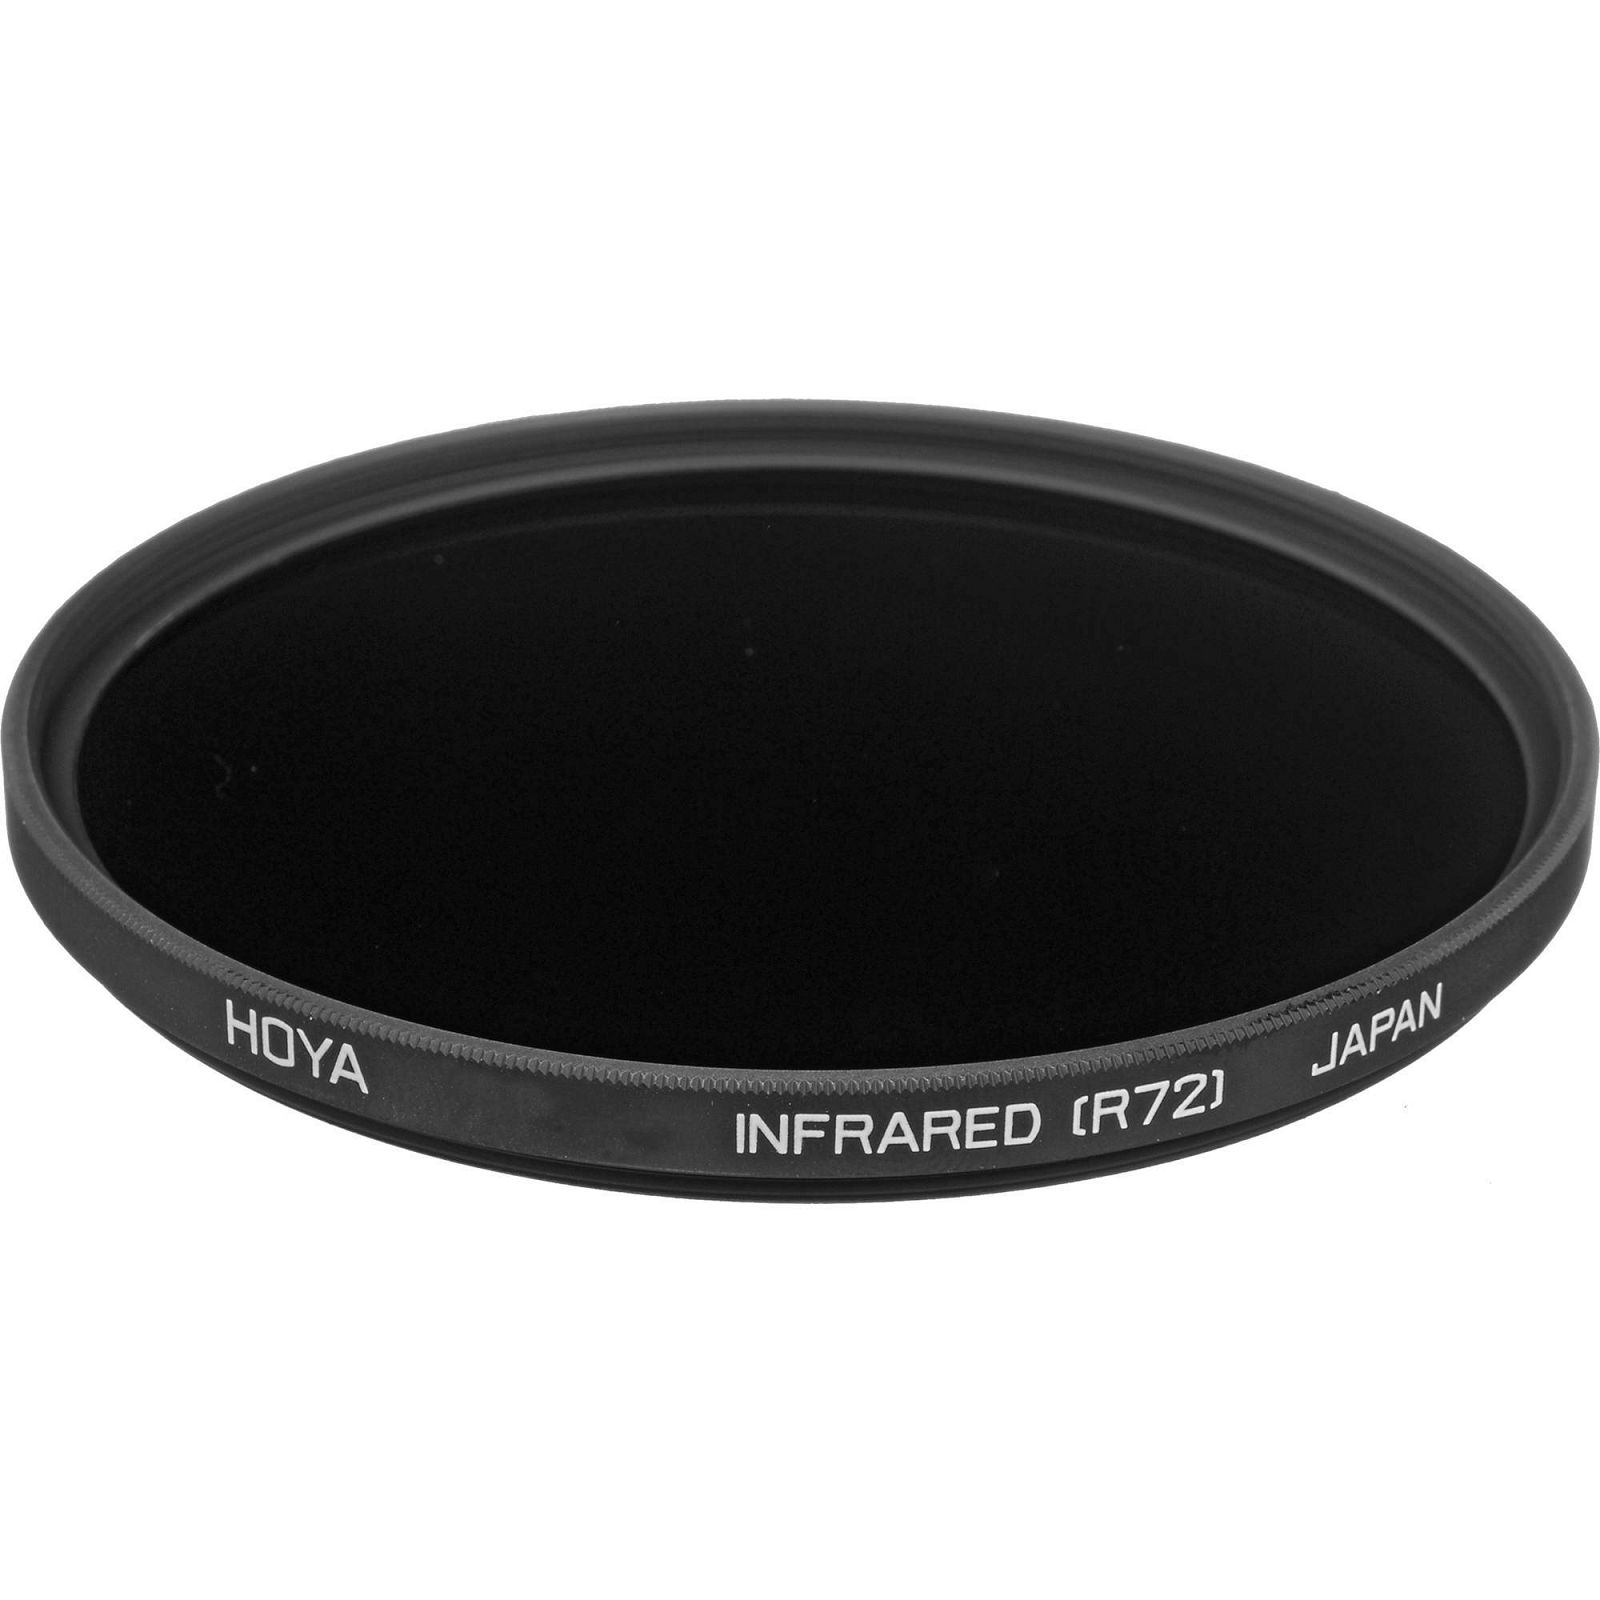 Hoya Infrared R72 filter 72mm